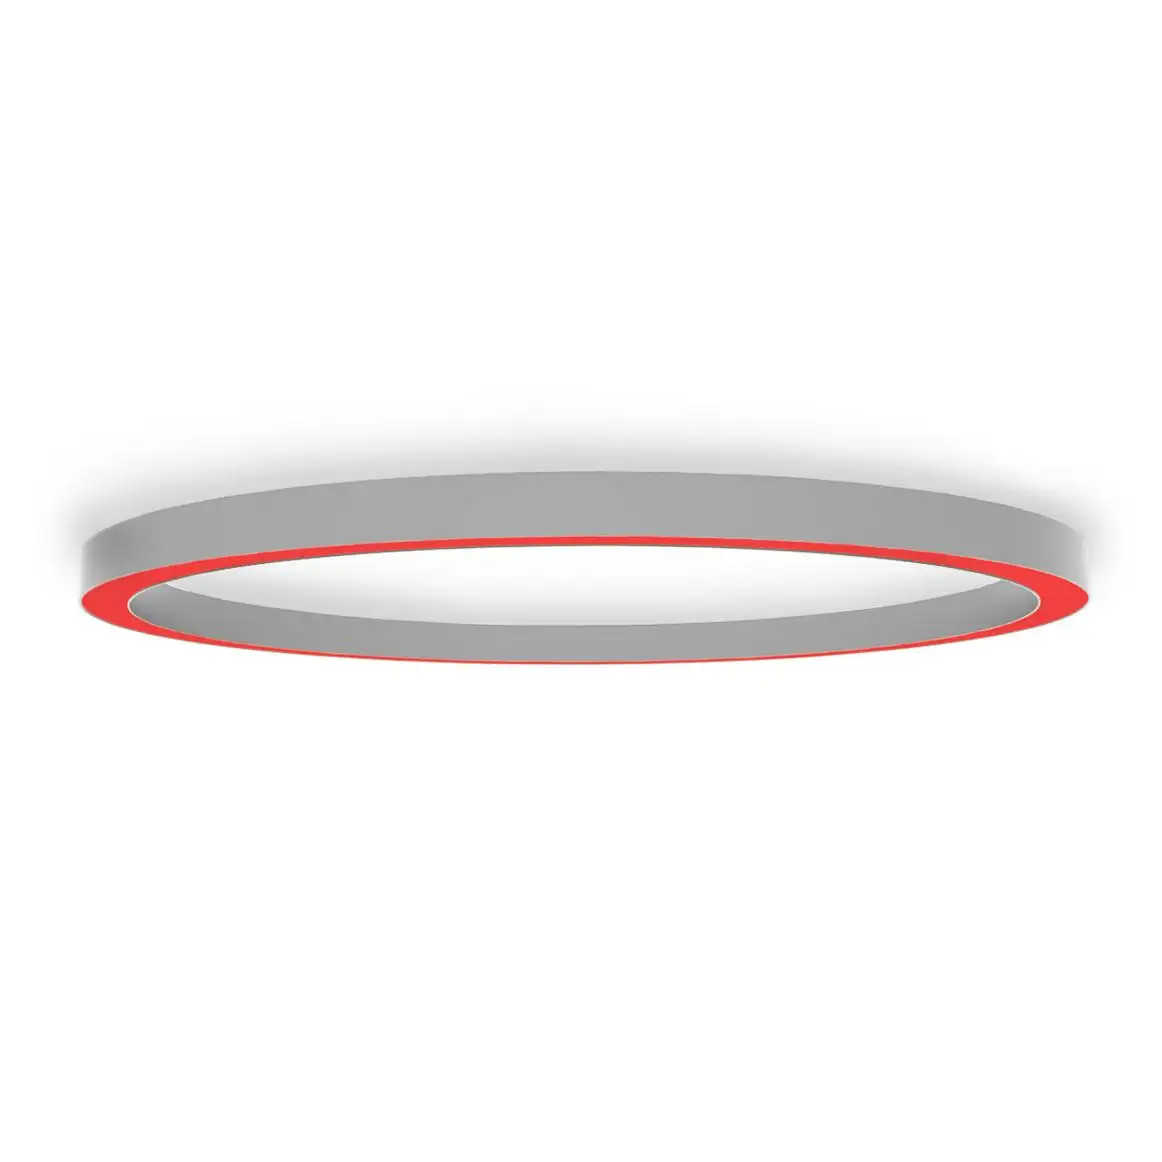 ENRICH 2020 hot item suspended circular led ring light flicker-free ceiling light for office, restaurant